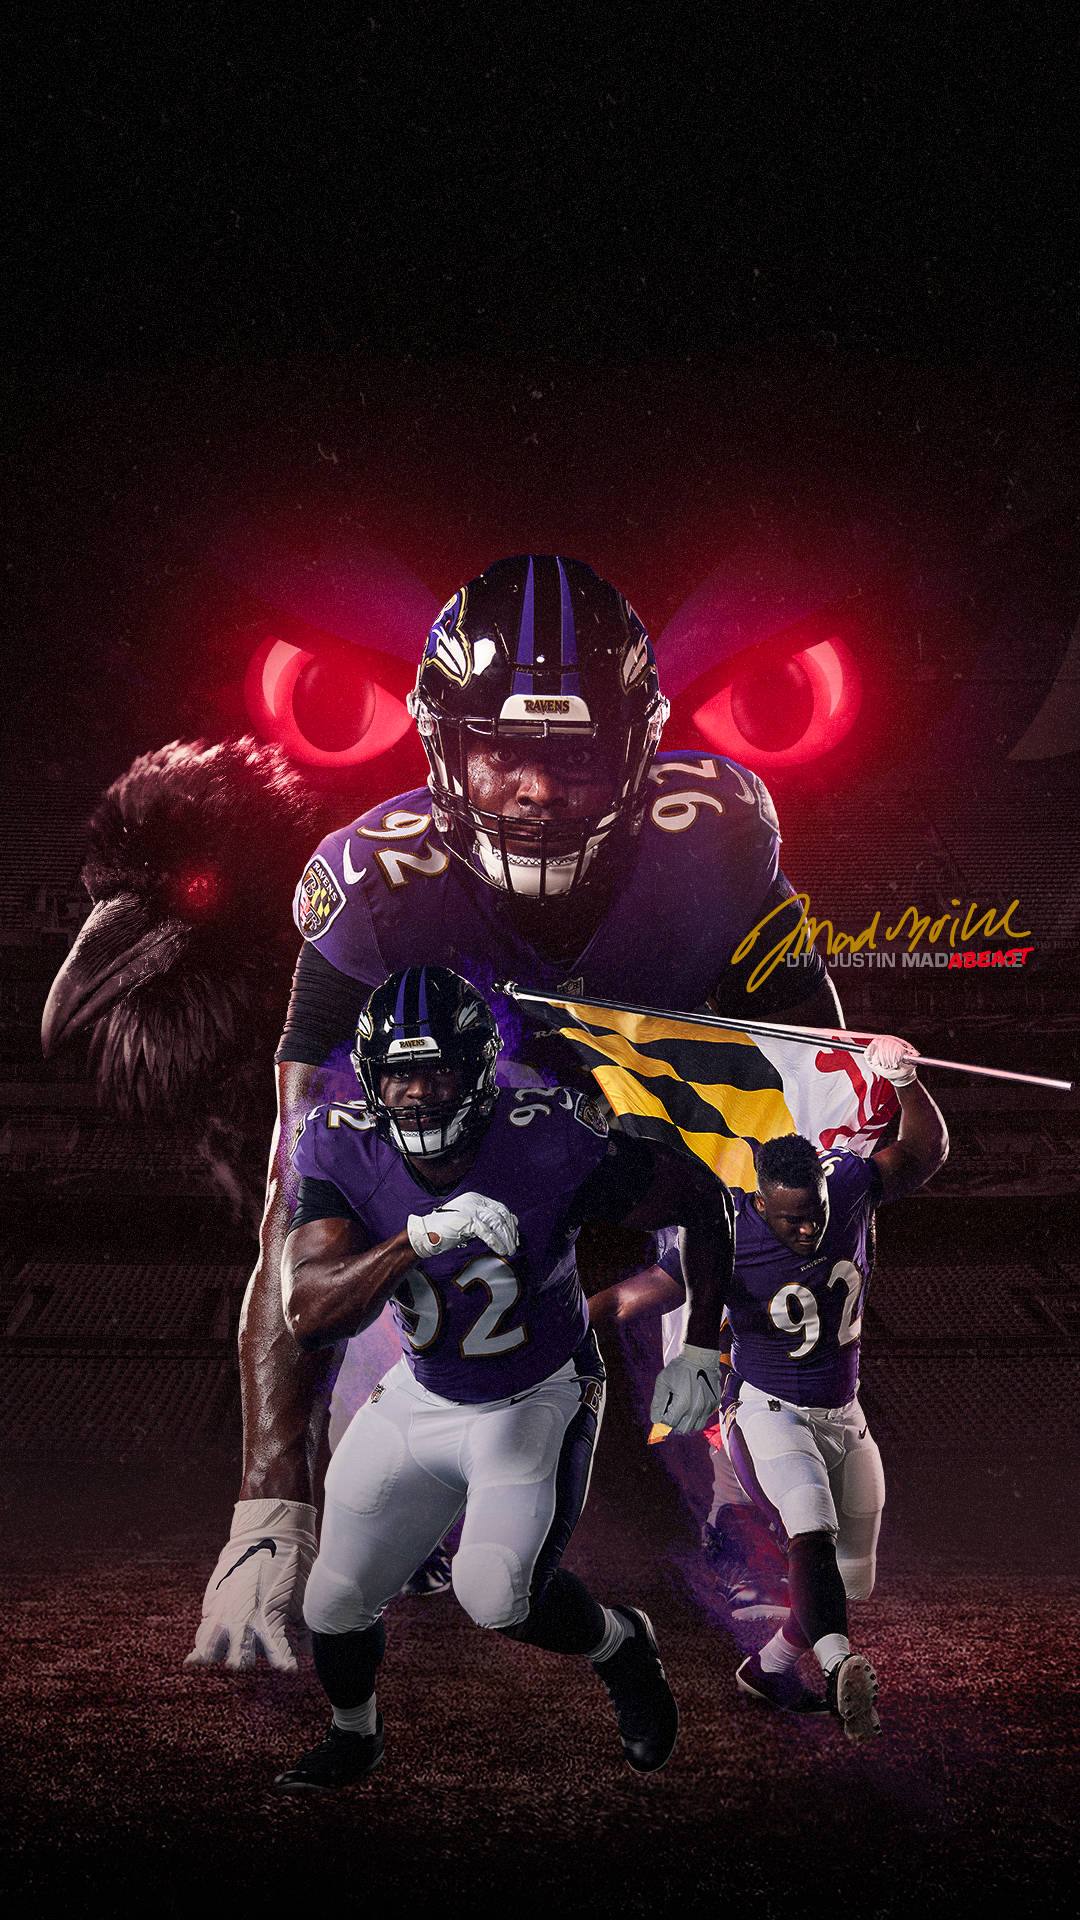 Vis din støtte med Baltimore Ravens Iphone Wallpaper. Wallpaper